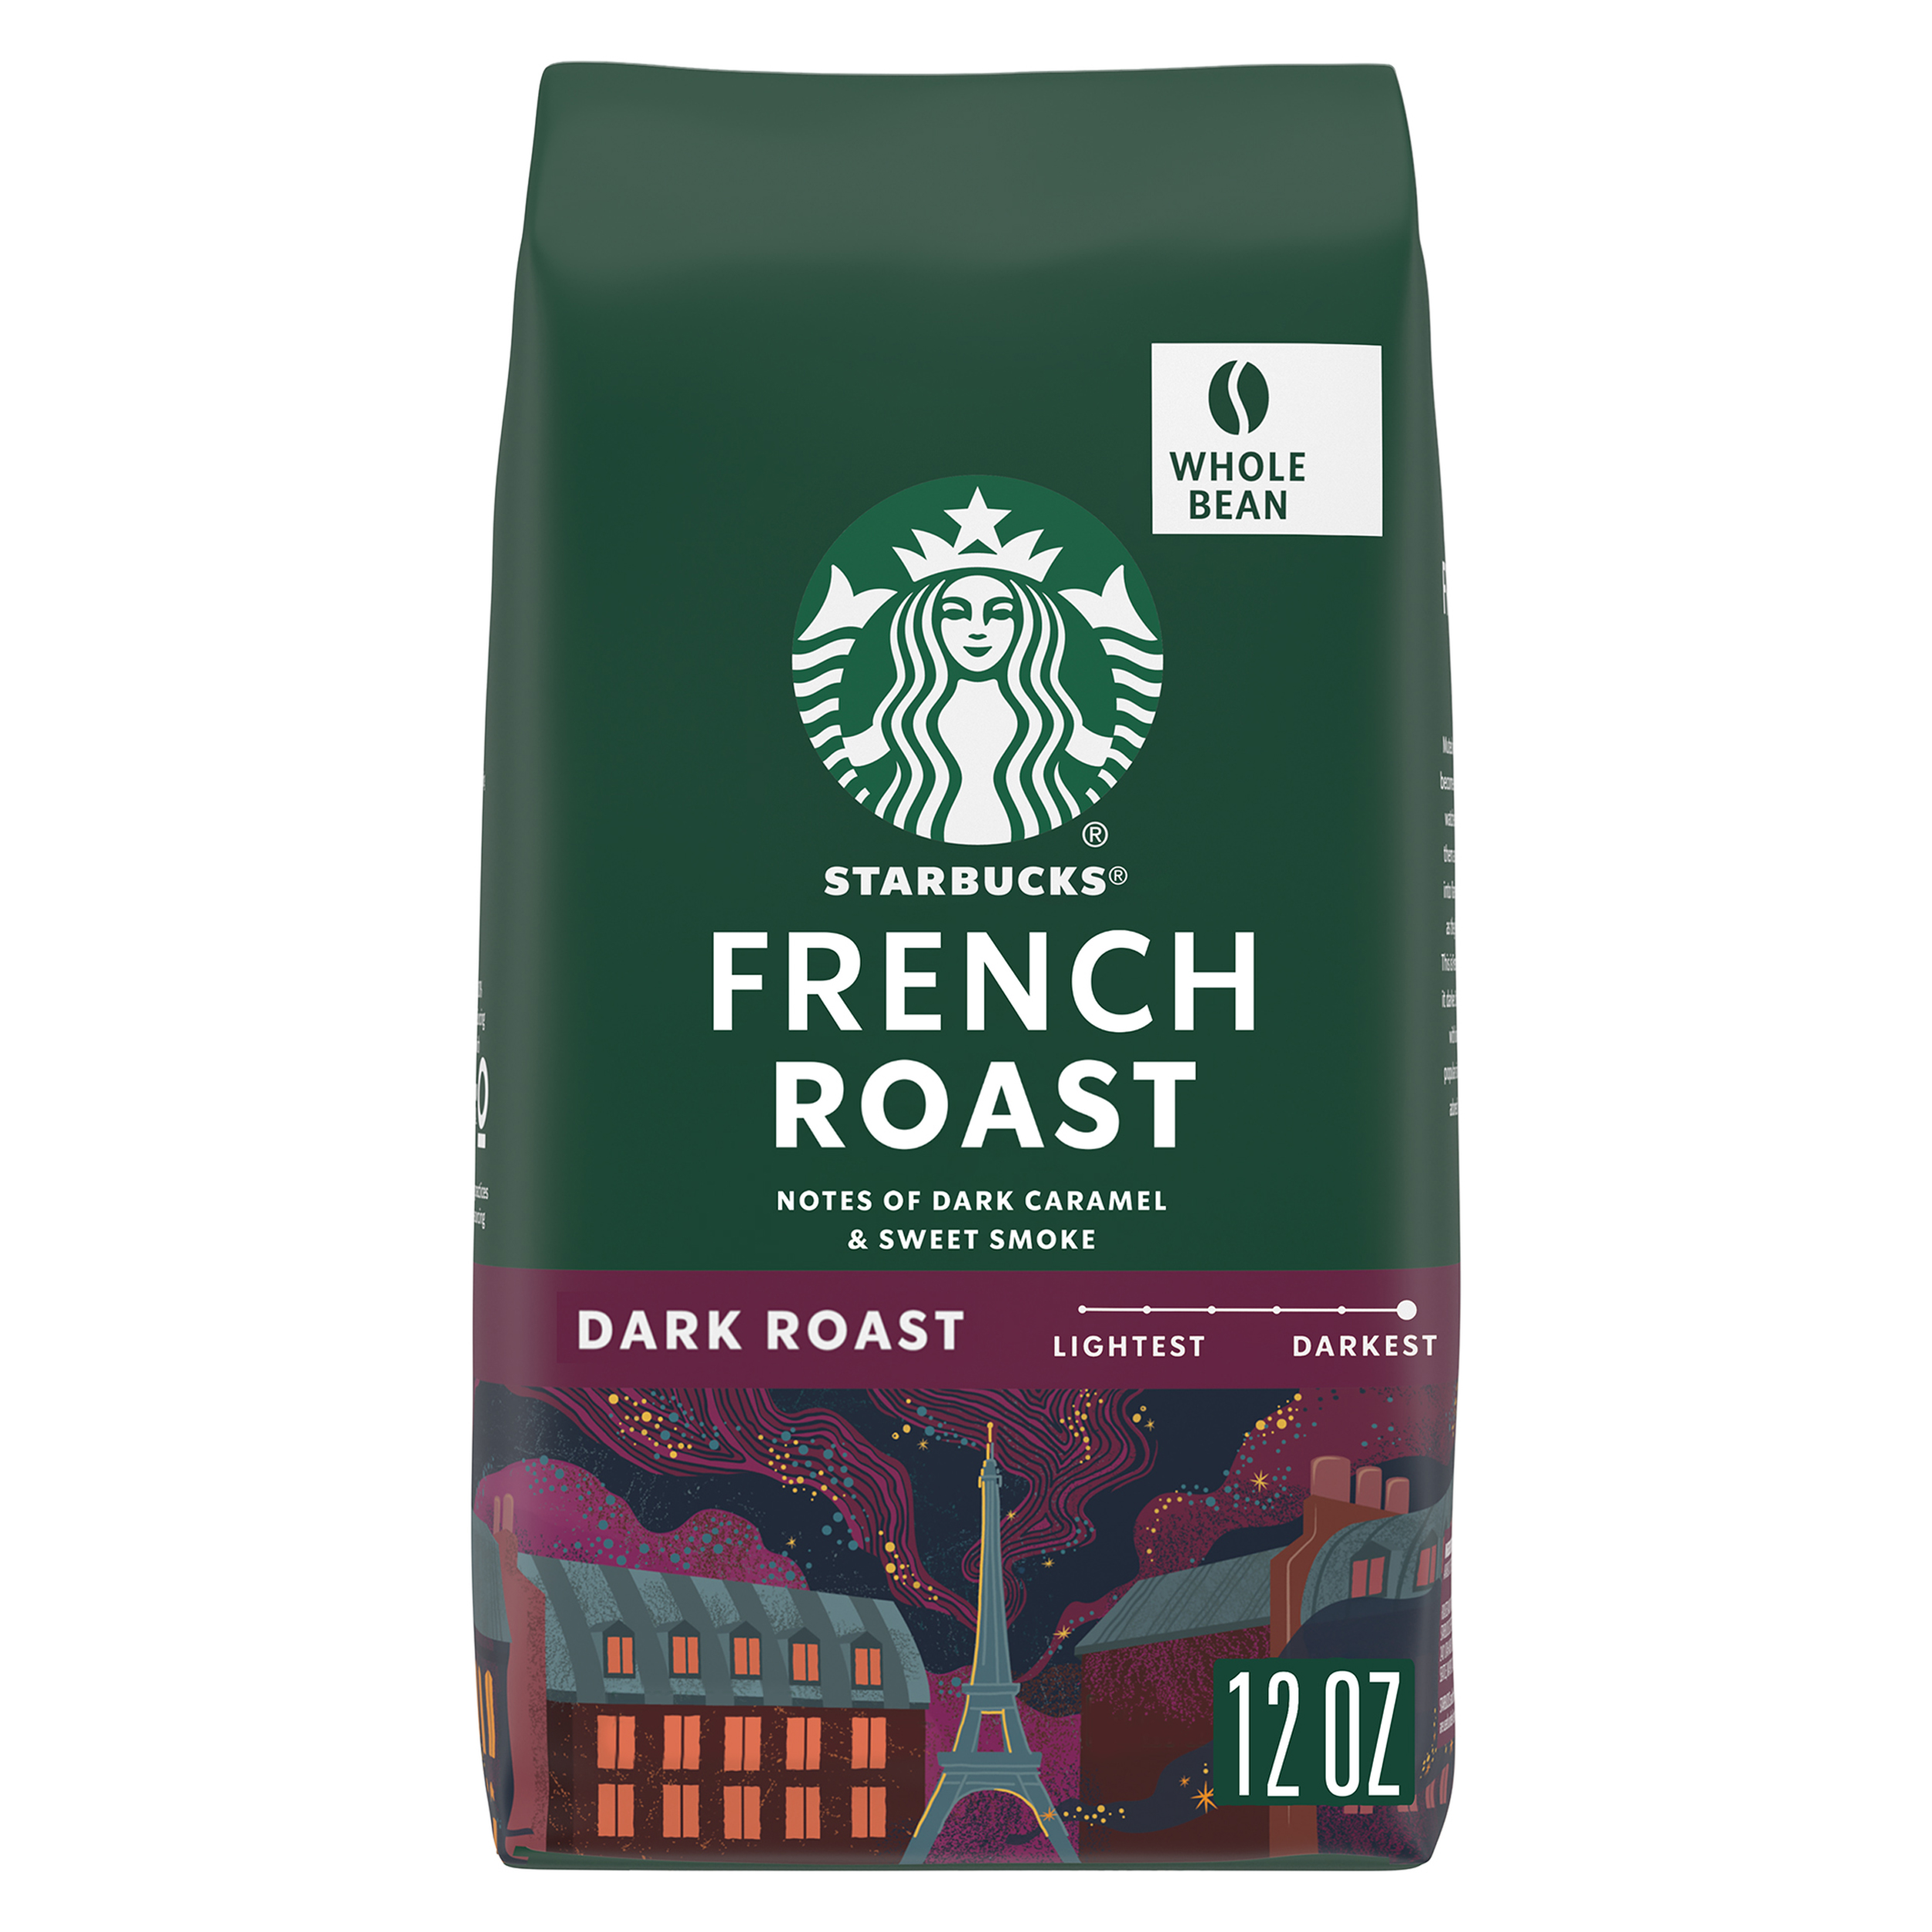 Starbucks French Roast, Whole Bean Coffee, Dark Roast, 12 oz - image 1 of 8